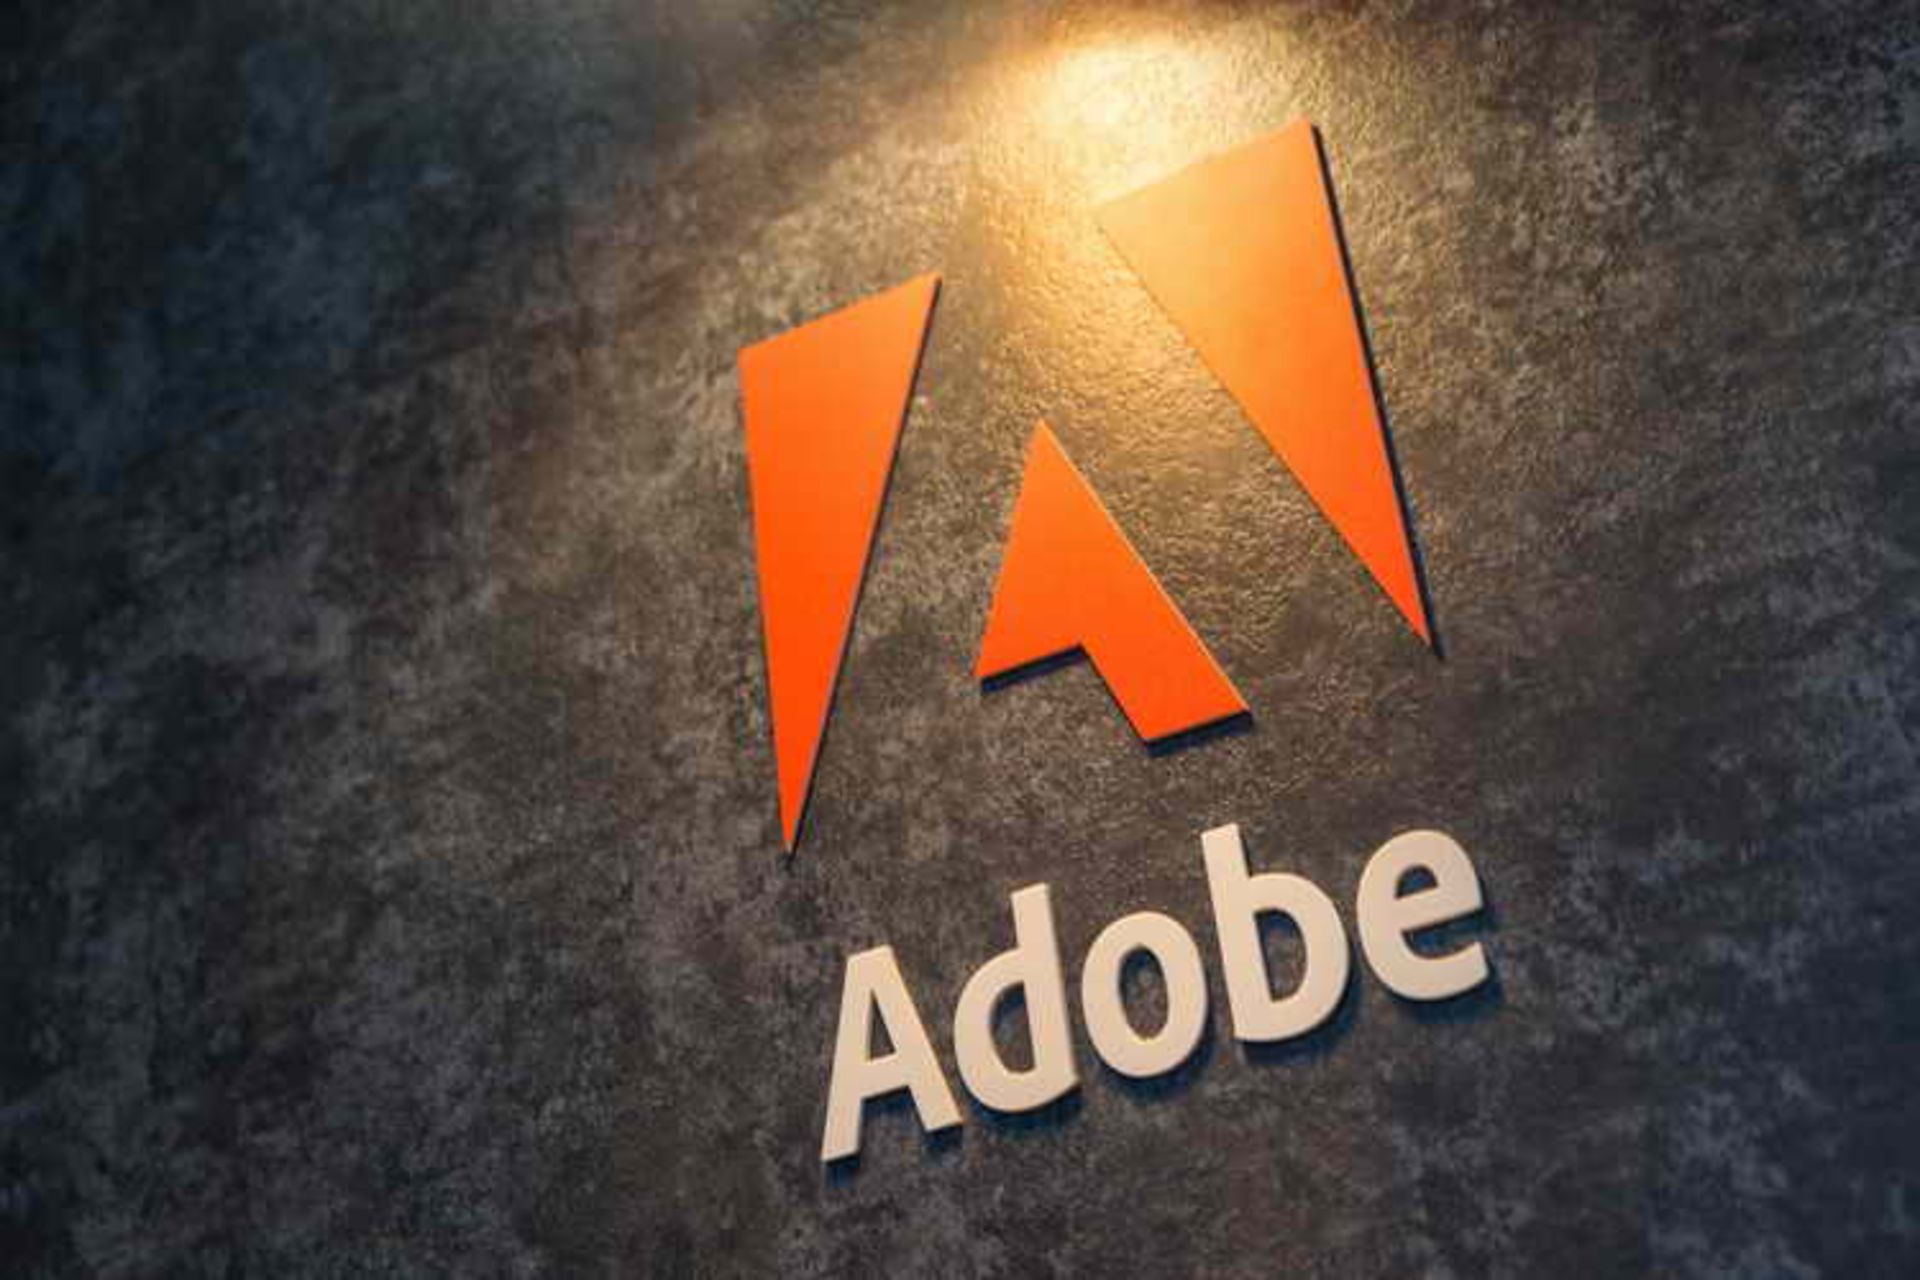  Adobe: Employ “always-on” marketing